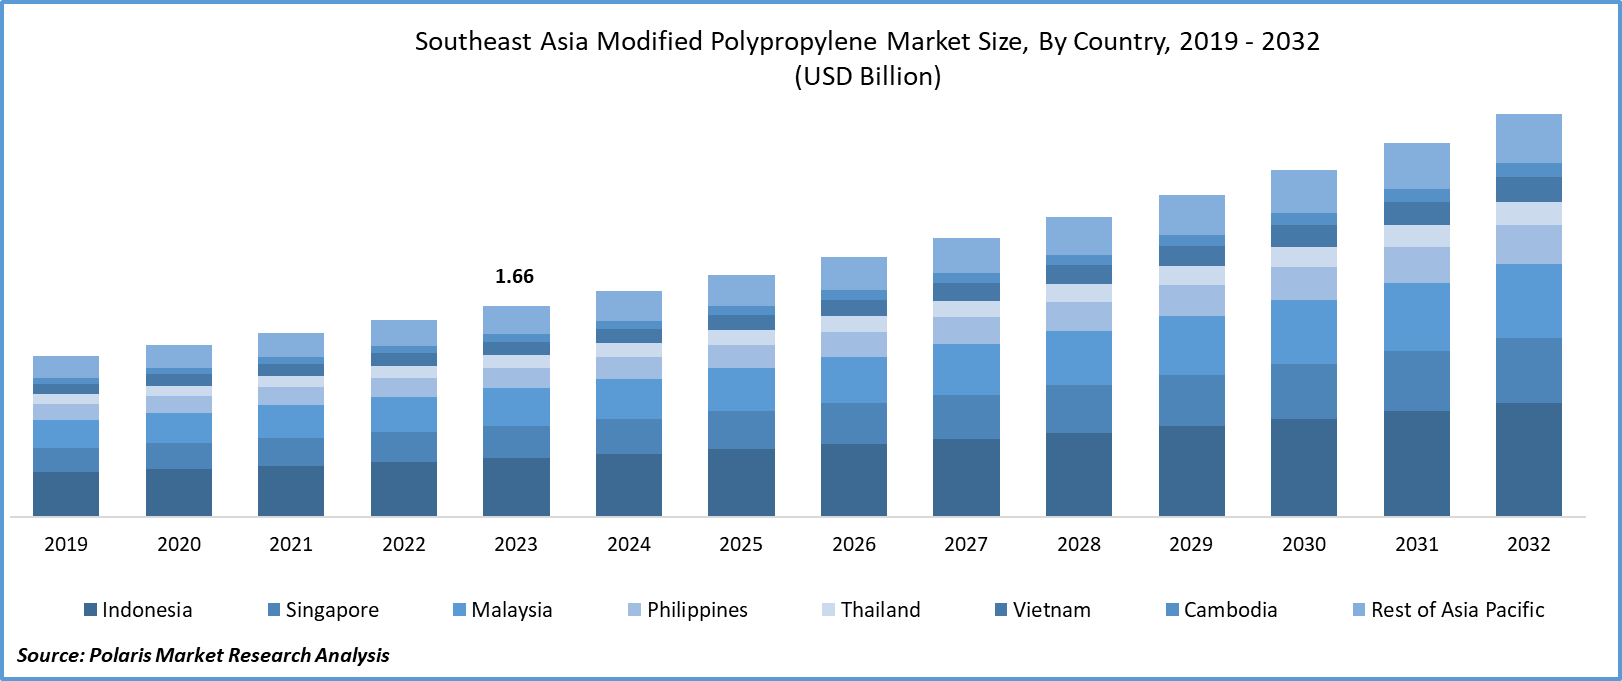 Southeast Asia Modified Polypropylene Market Size